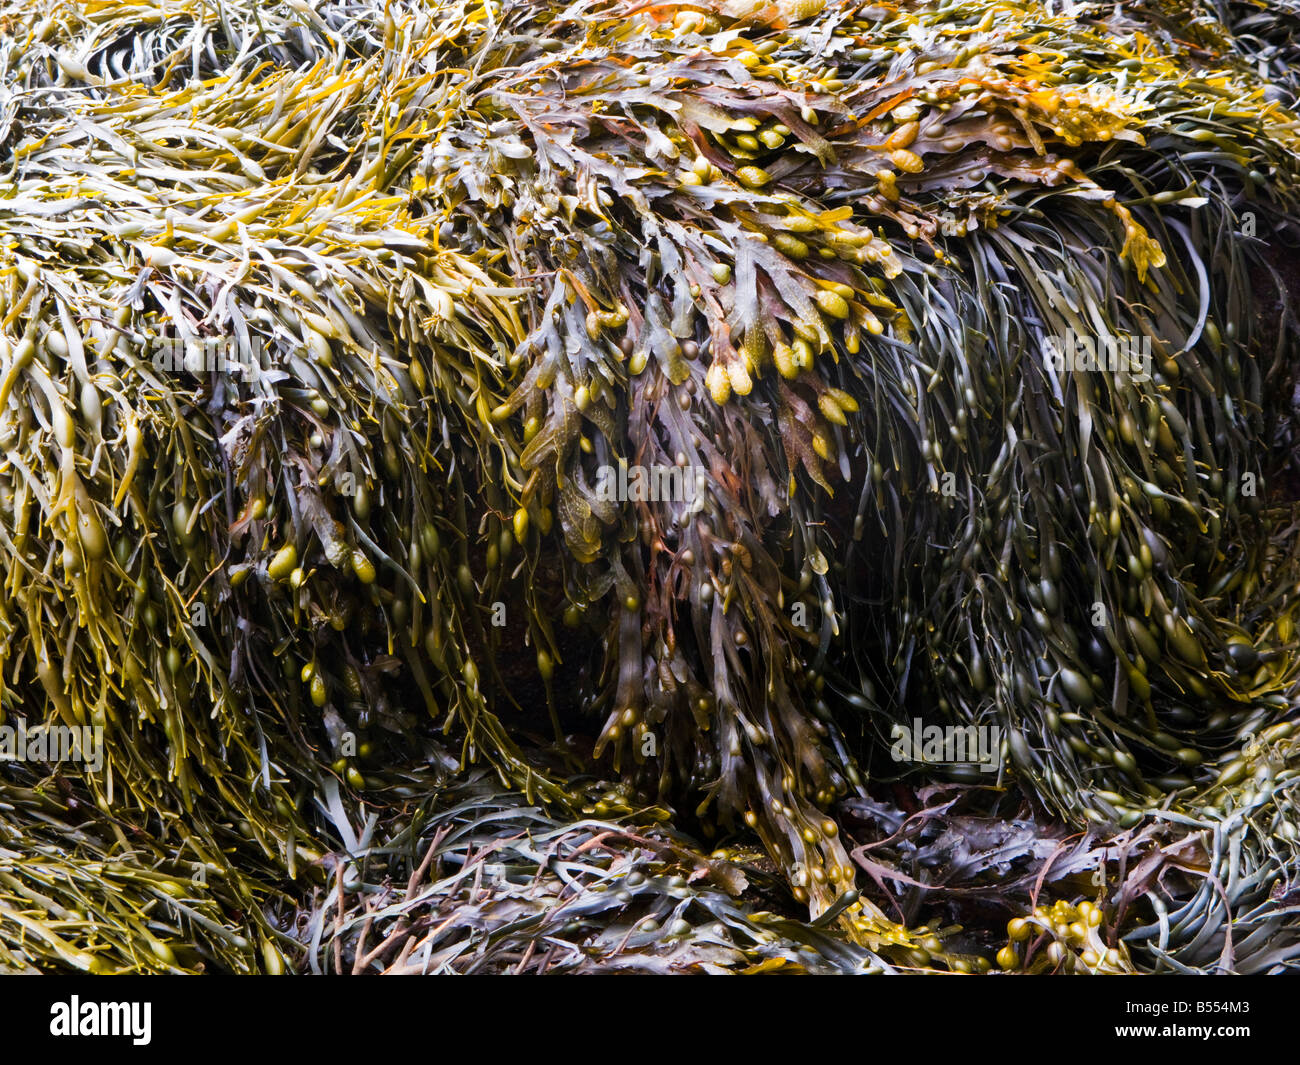 Seaweed covering rocks Stock Photo